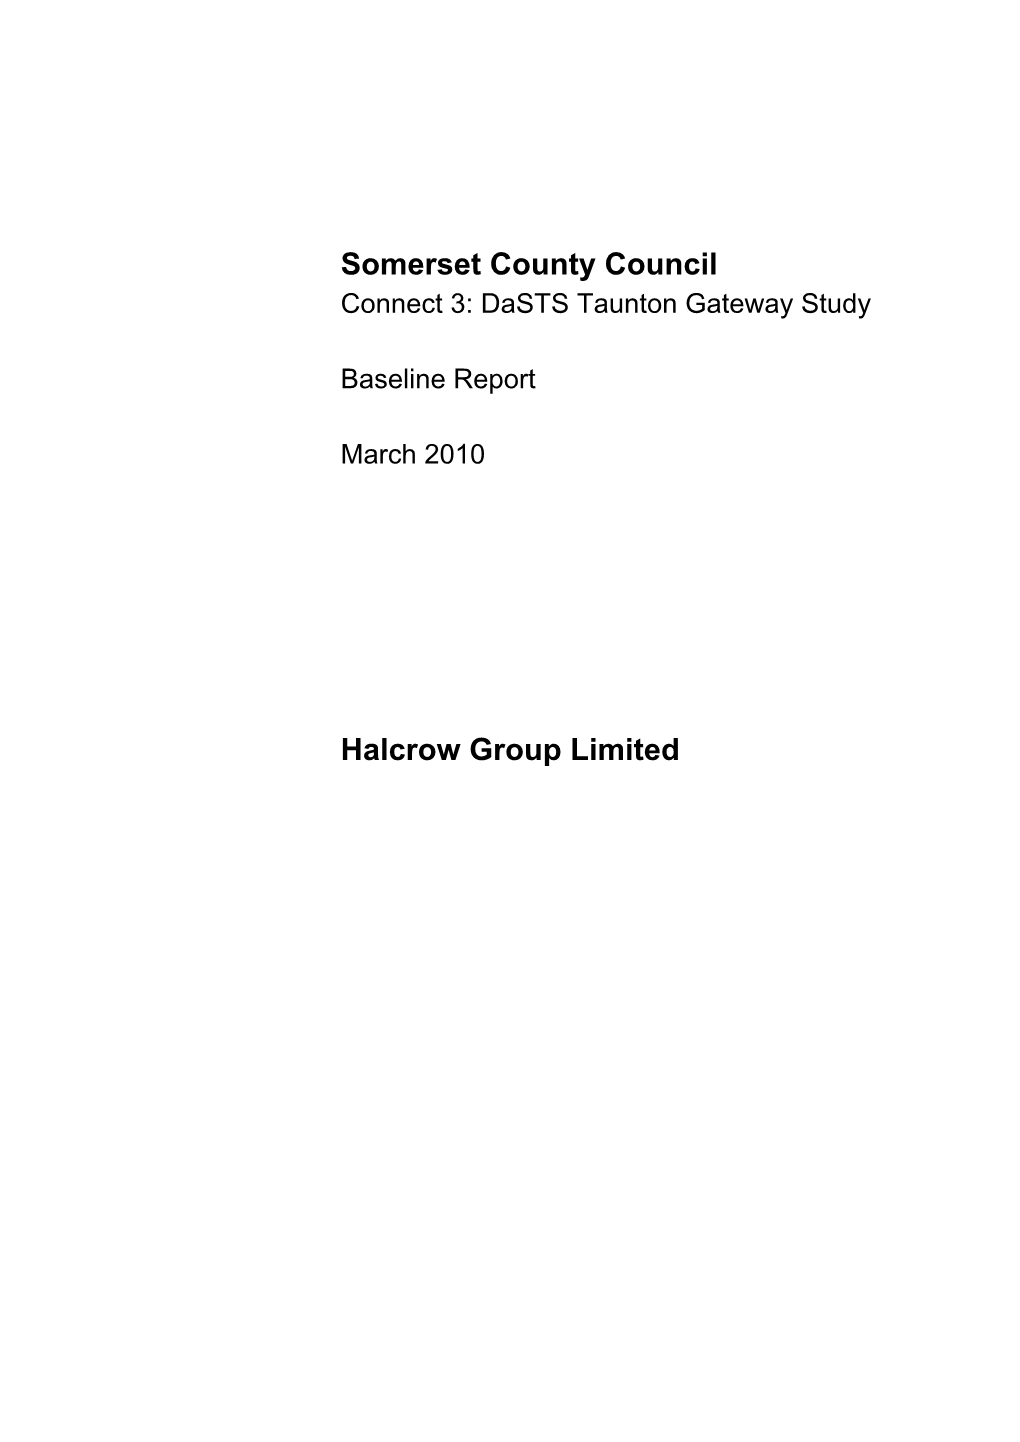 Dasts Taunton Gateway Study Baseline Report March 2010